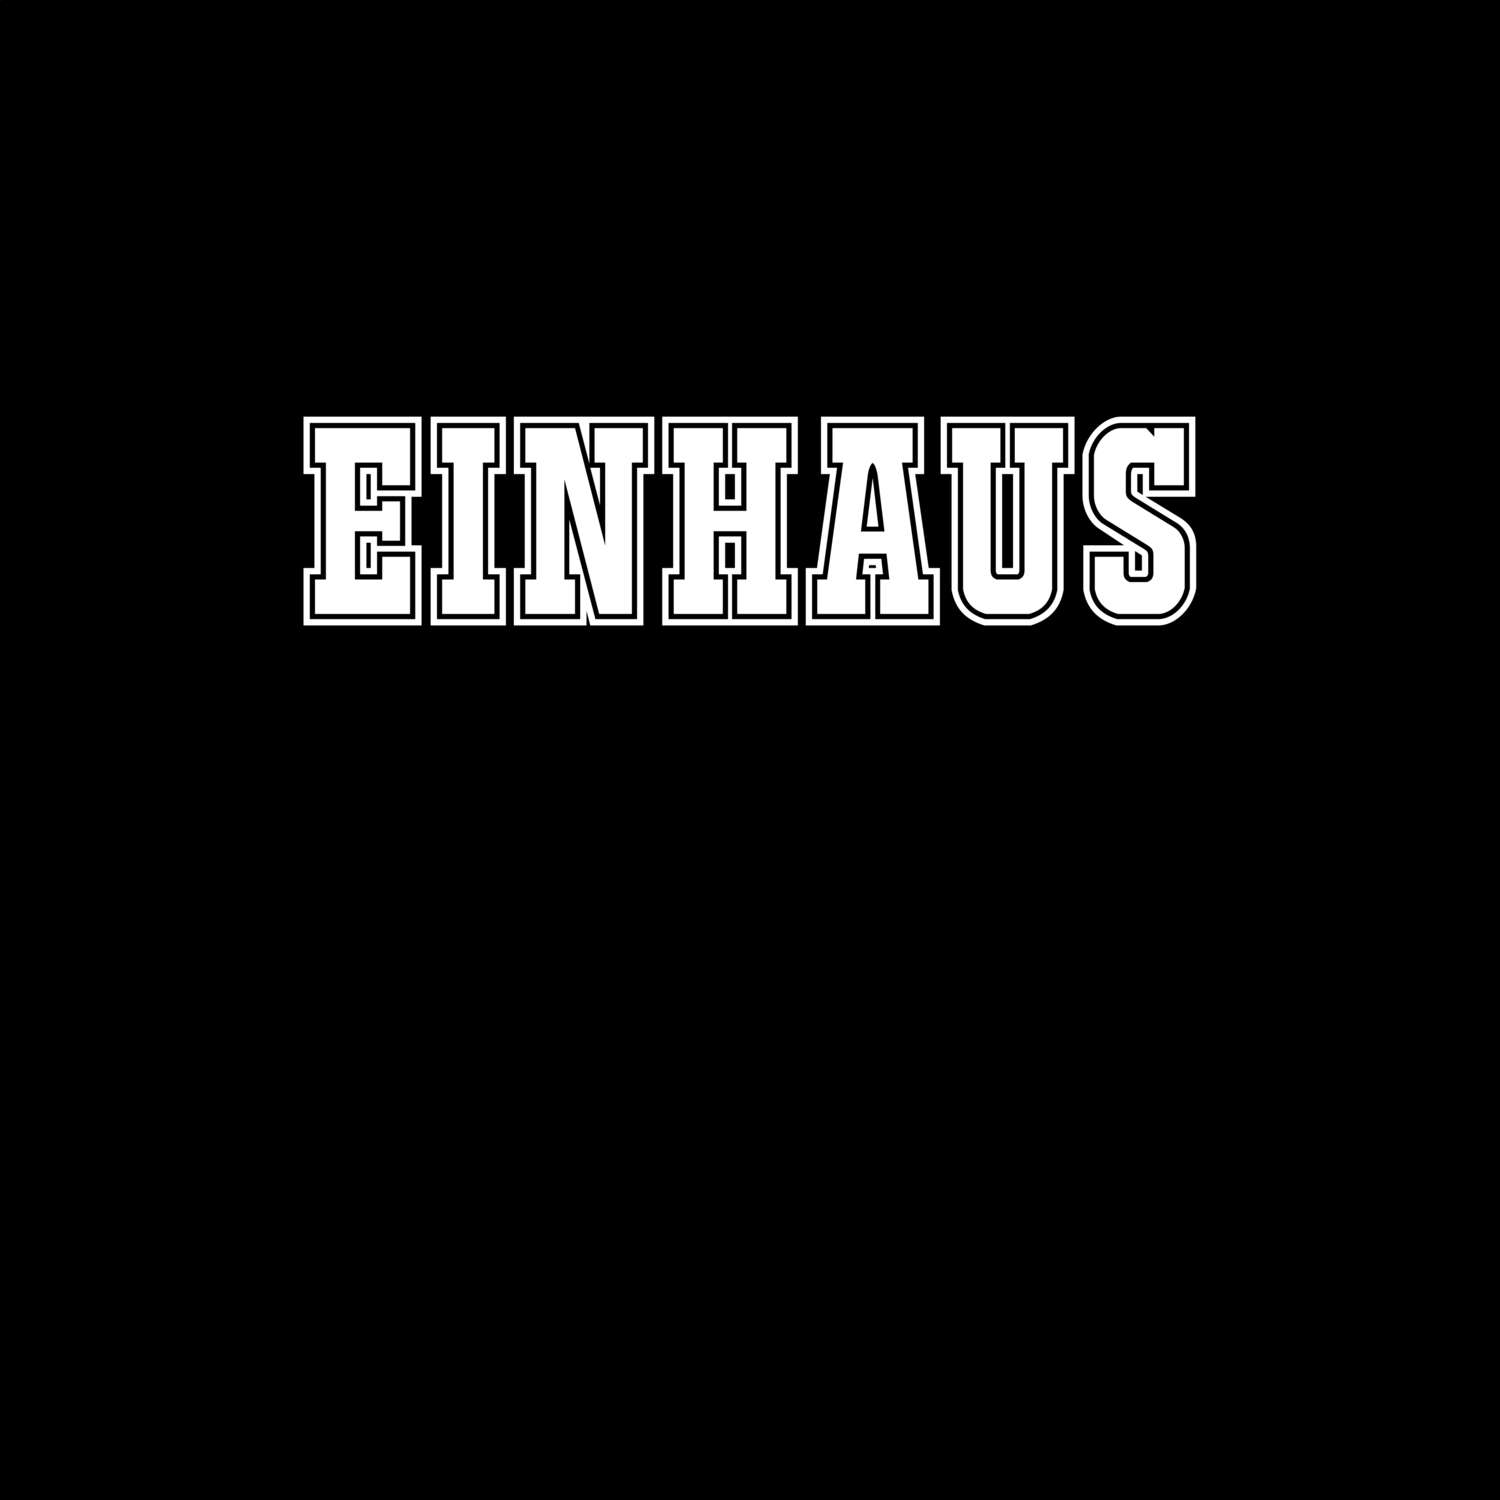 Einhaus T-Shirt »Classic«